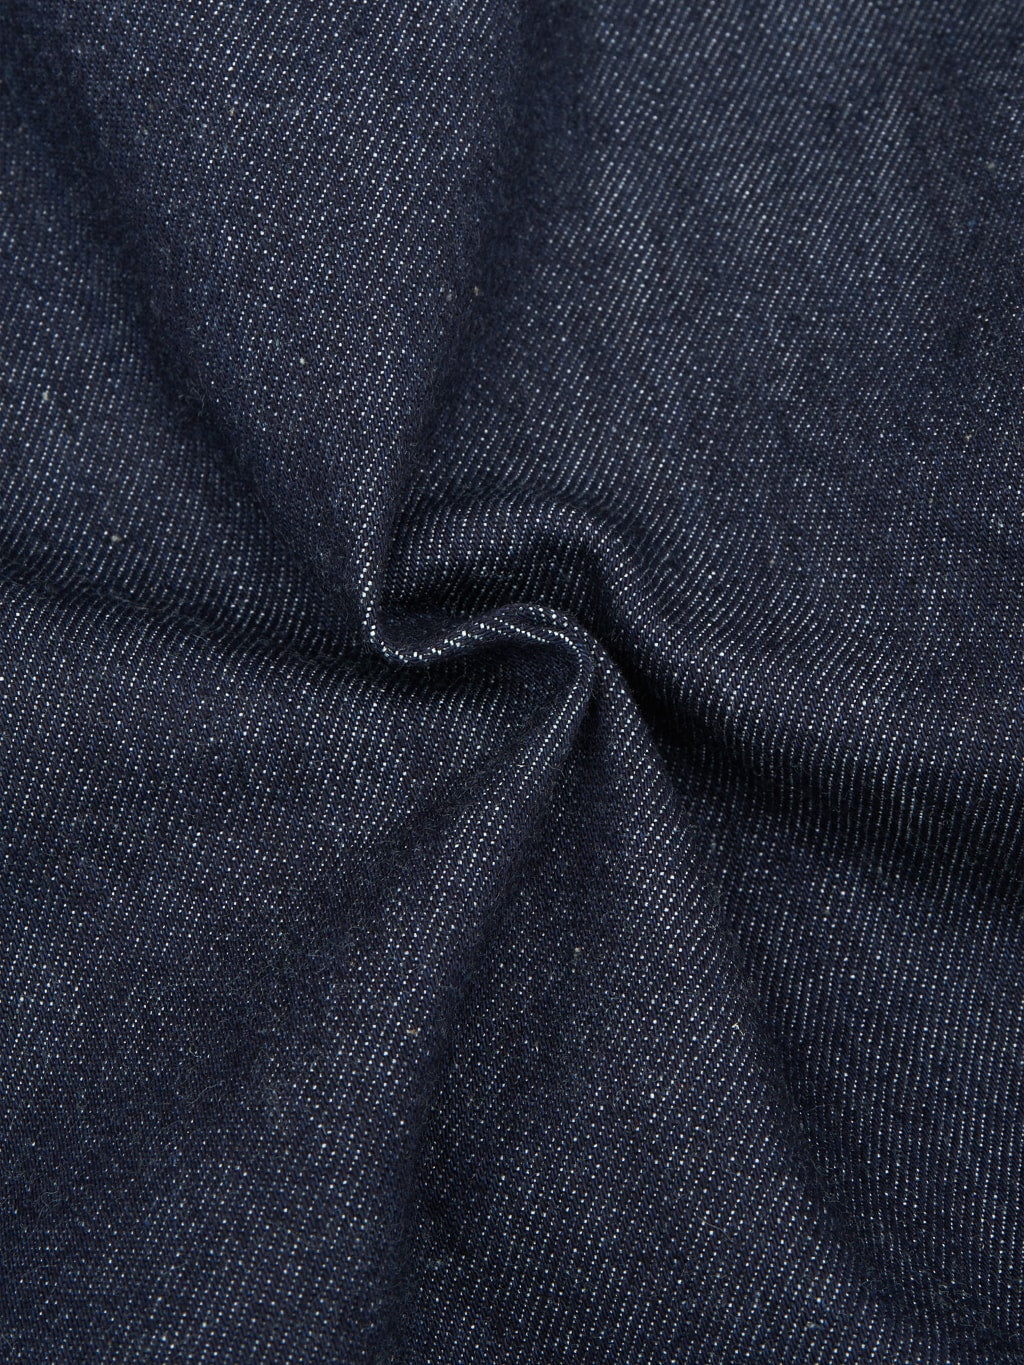 Japan Blue J508 lightweight selvedge denim loose Jeans texture